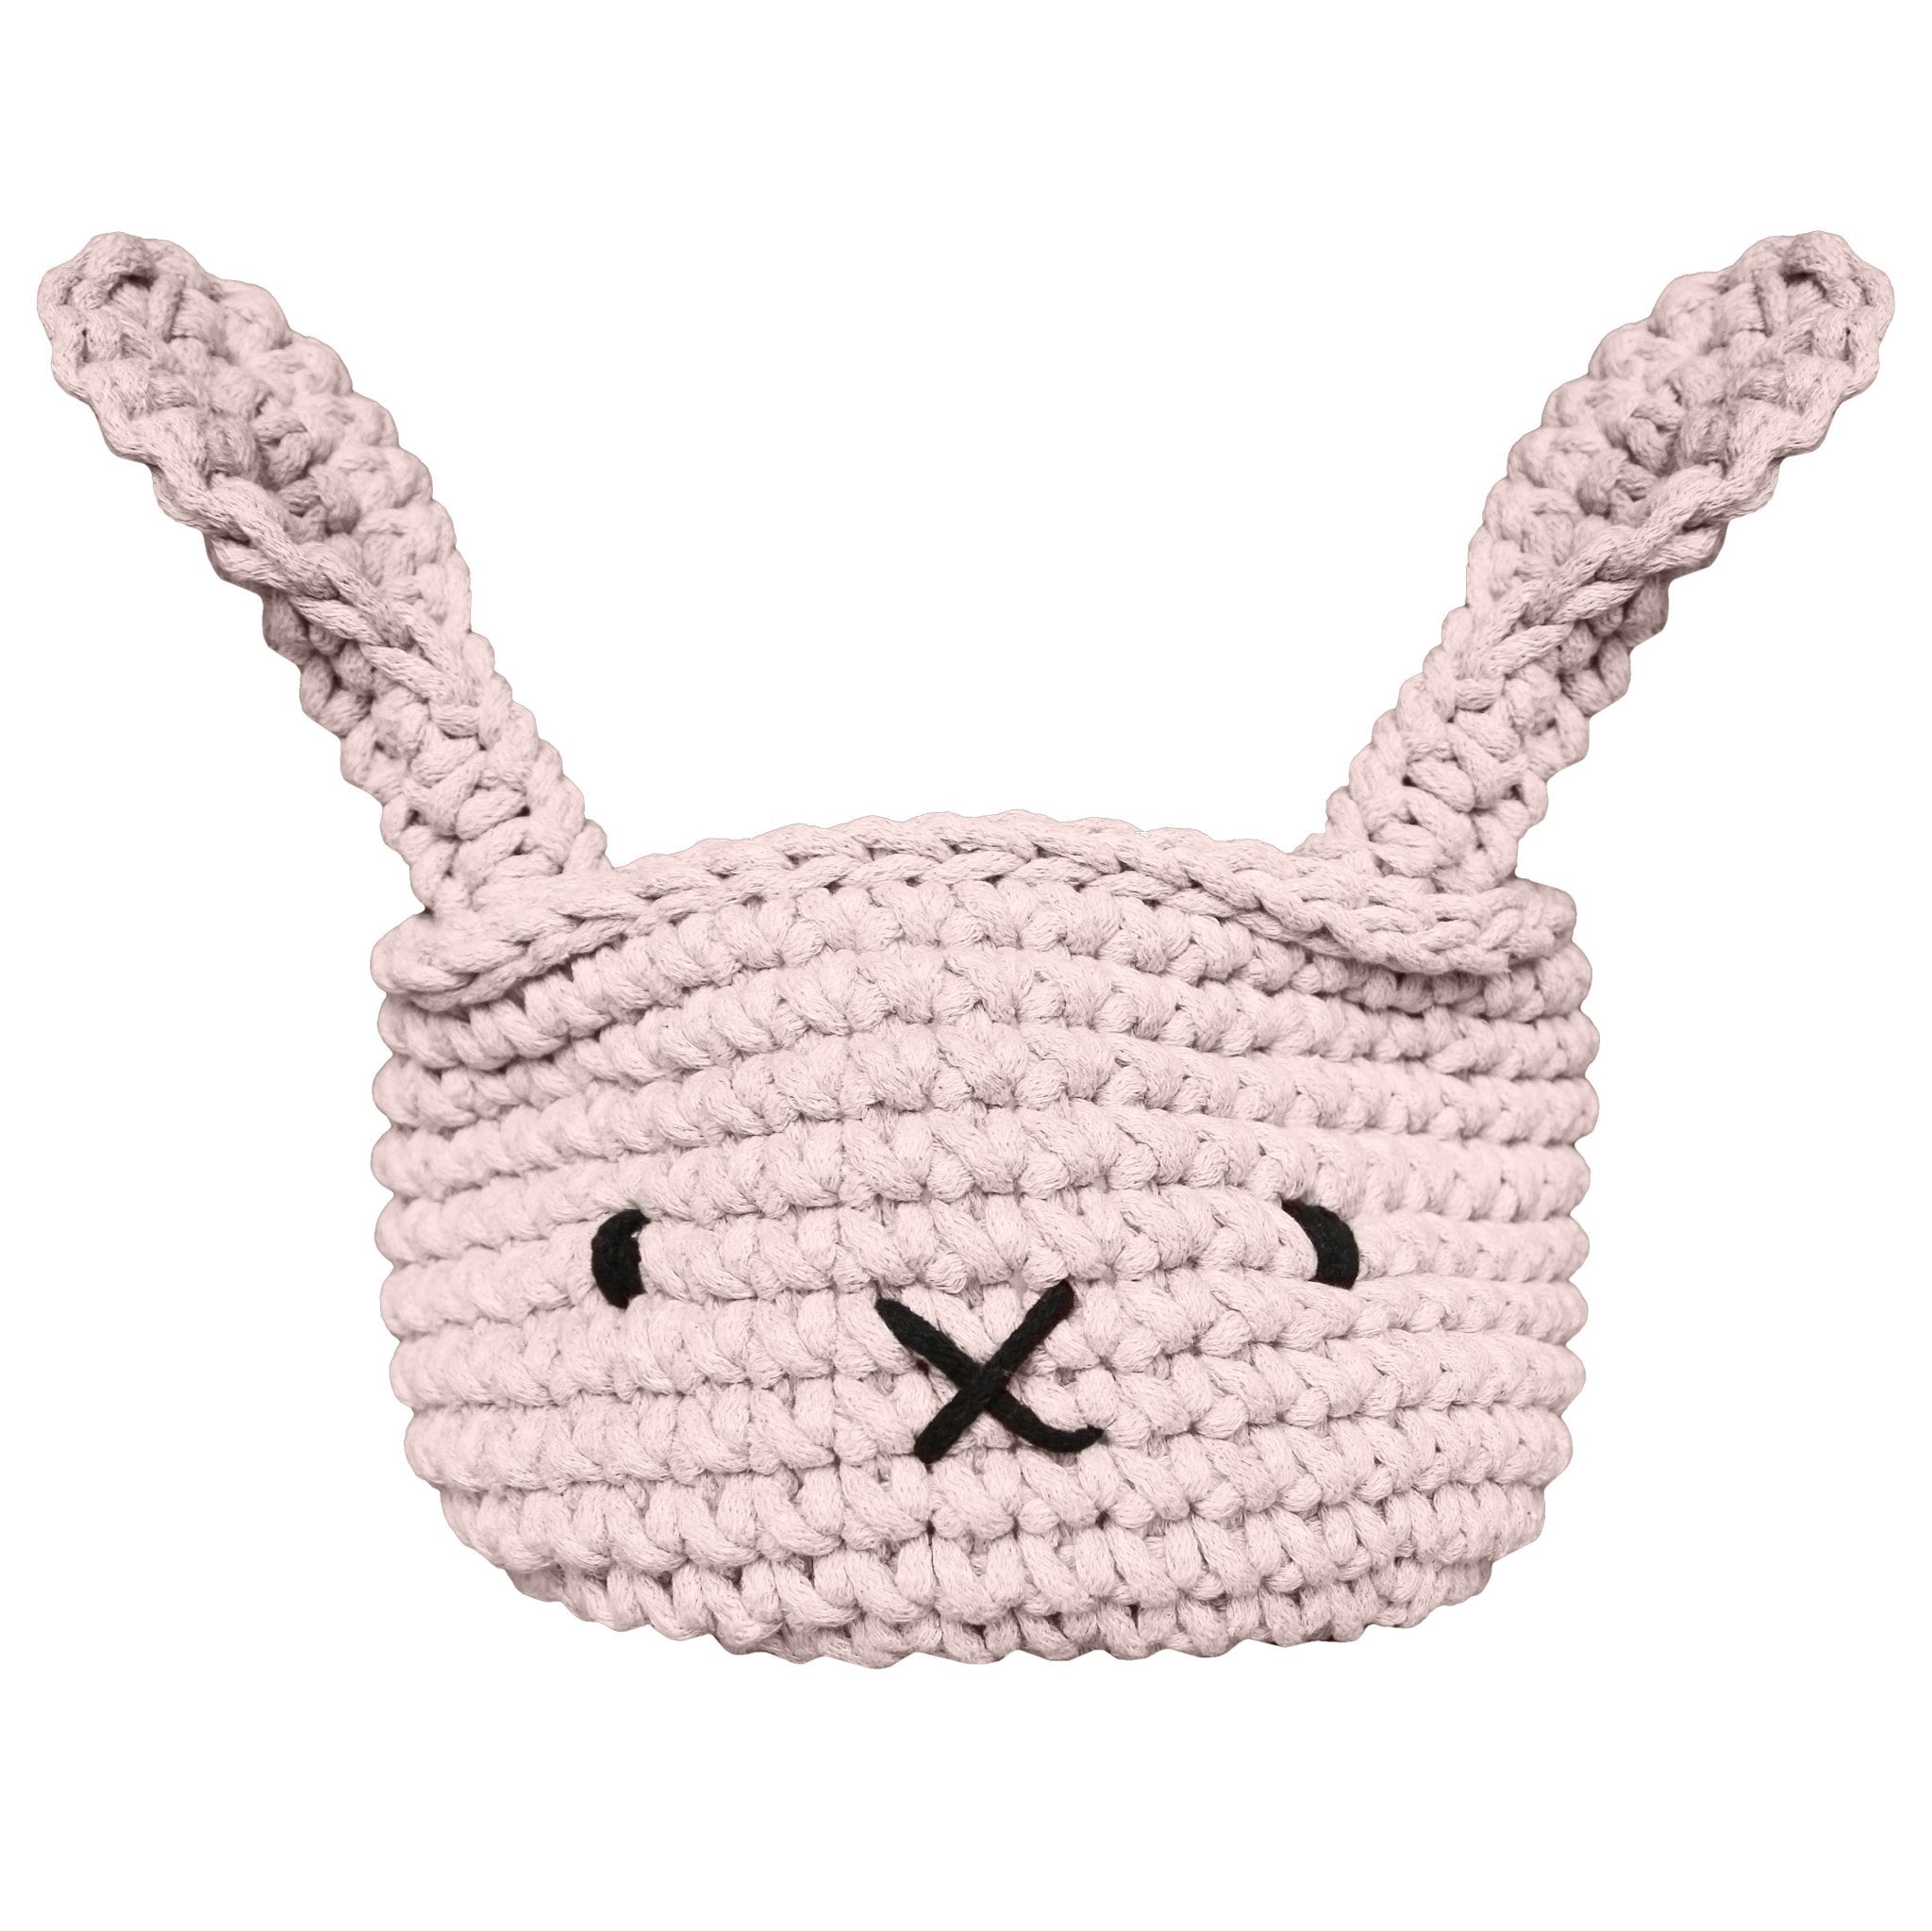 Zuri House Bunny Basket | PALE PINK - Large